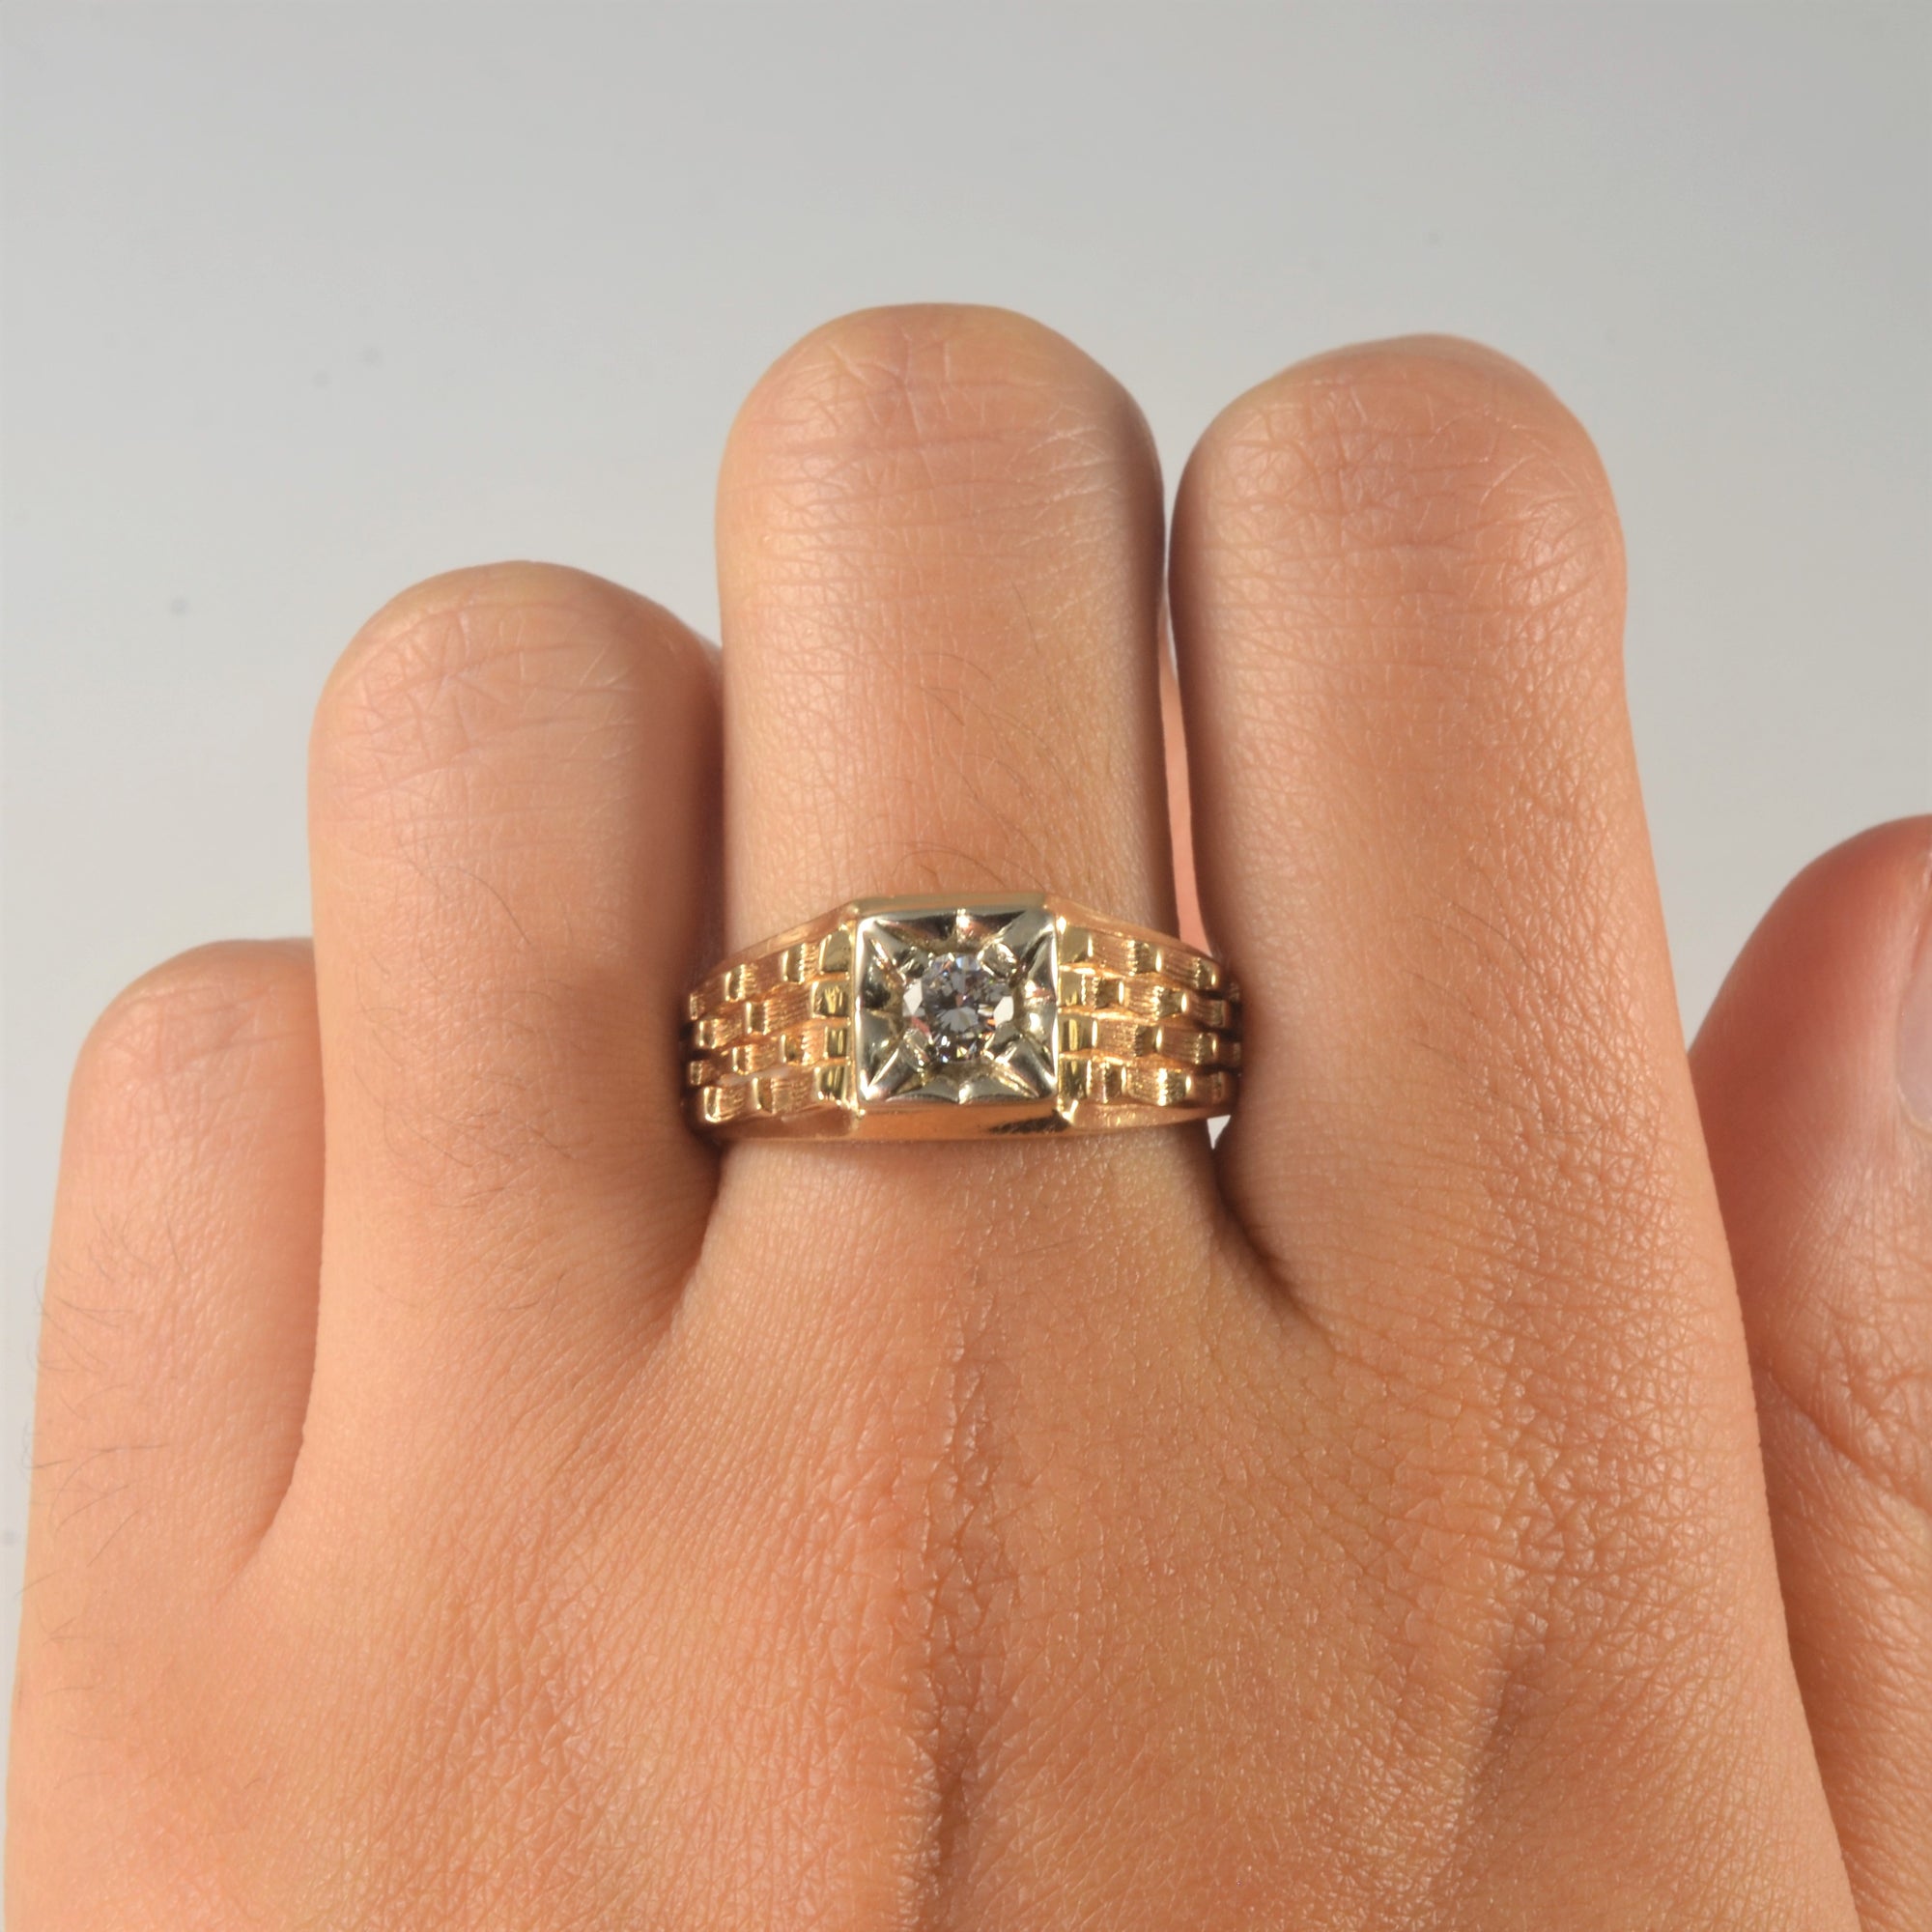 Birks' Weave Patterned Diamond Ring | 0.25ct | SZ 10 |